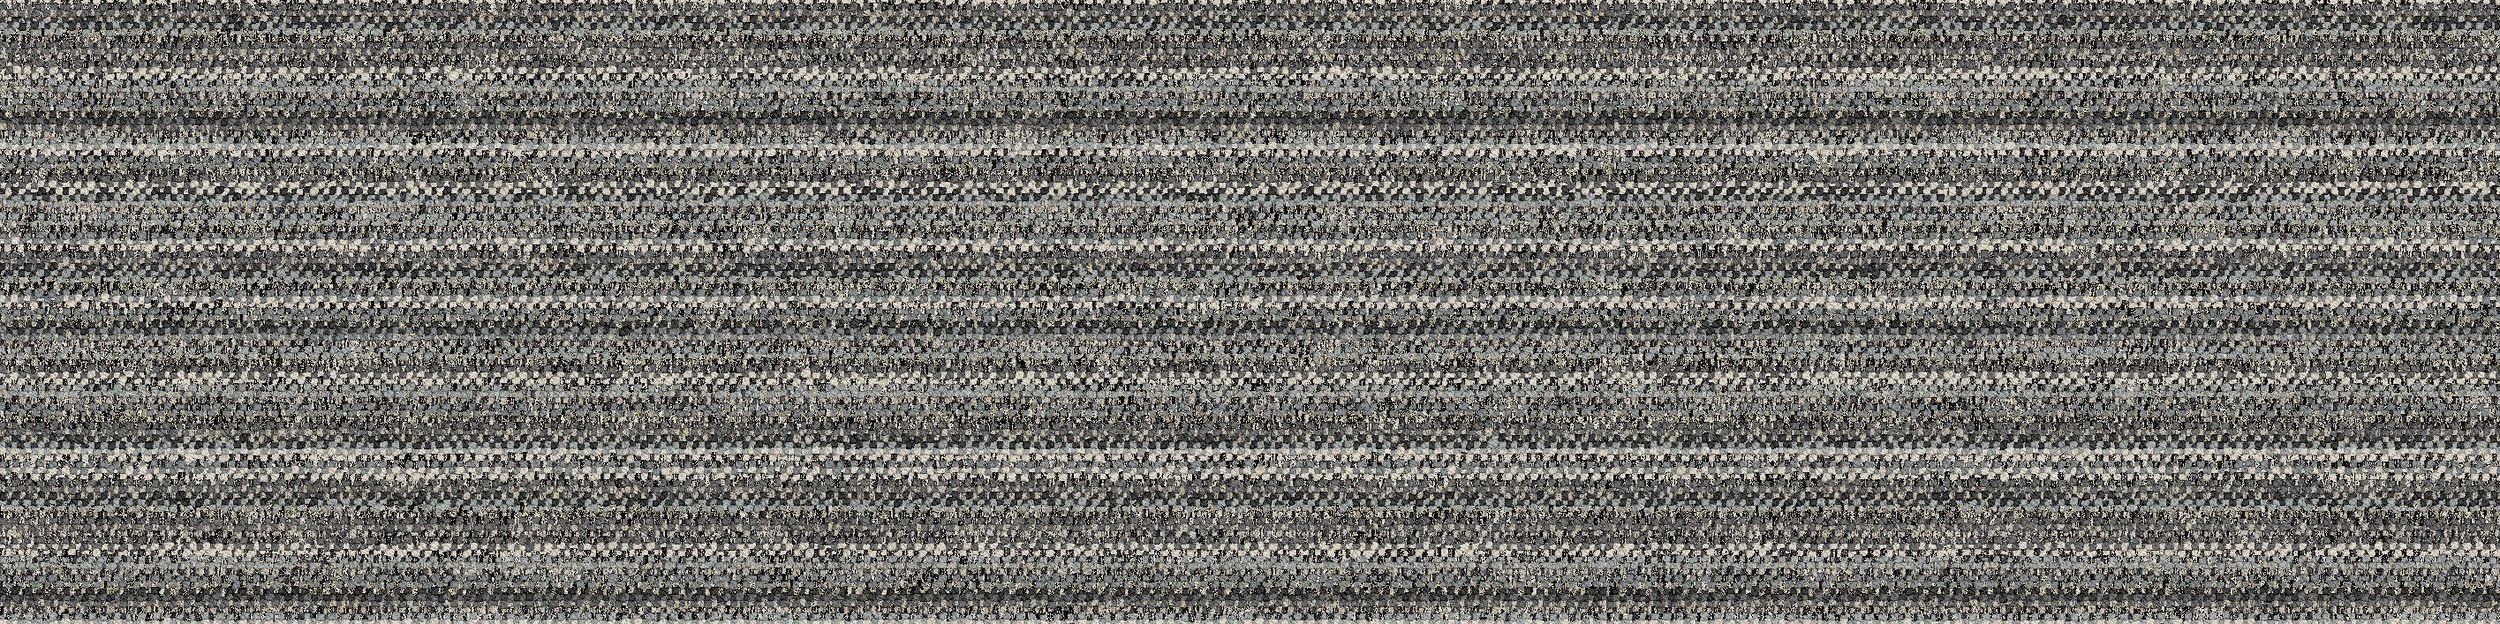 WW865 Carpet Tile In Moorland Warp image number 2